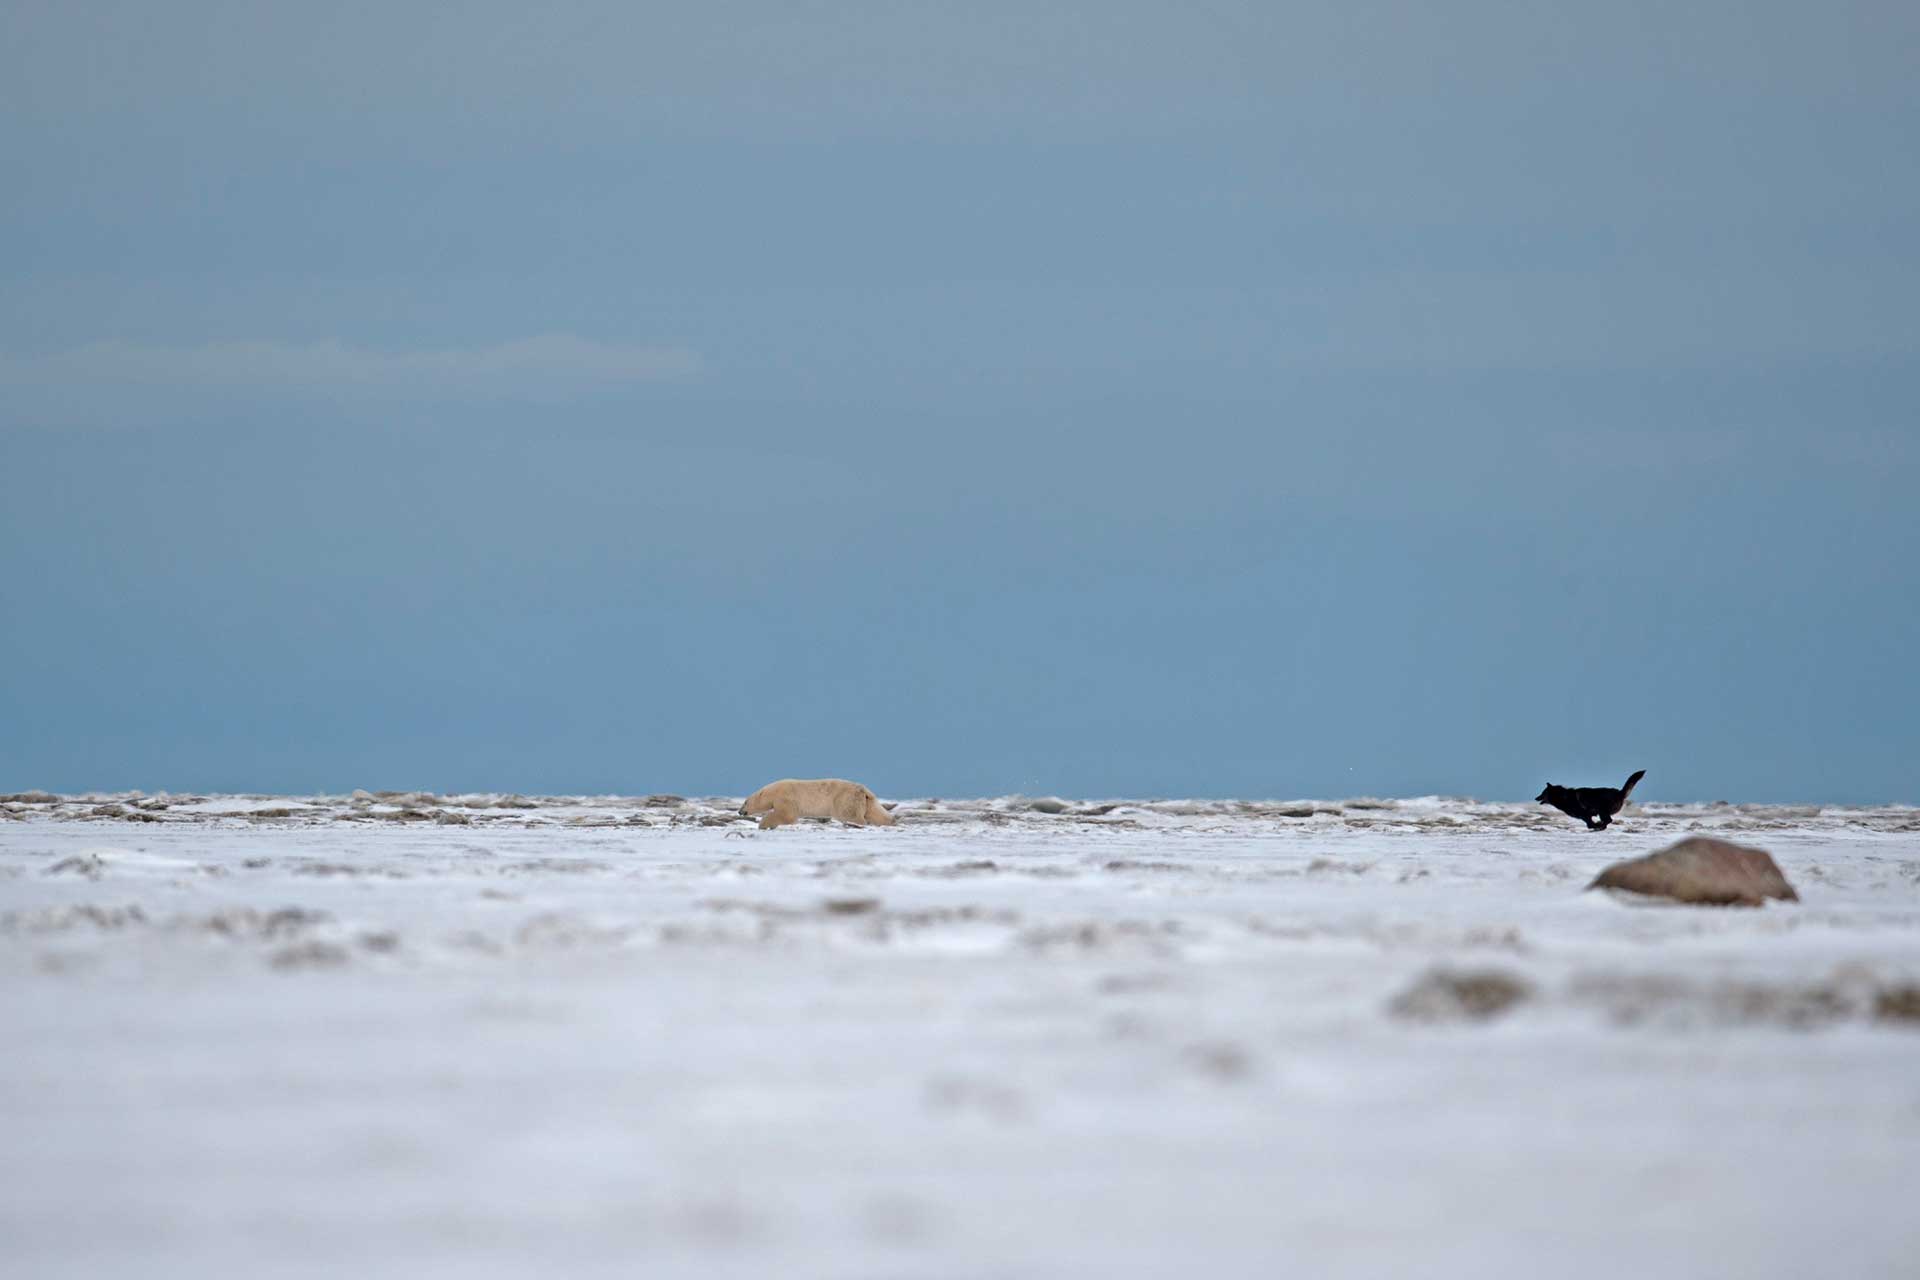 Wolf chasing a polar bear at Nanuk. Jianguo Xie photo.